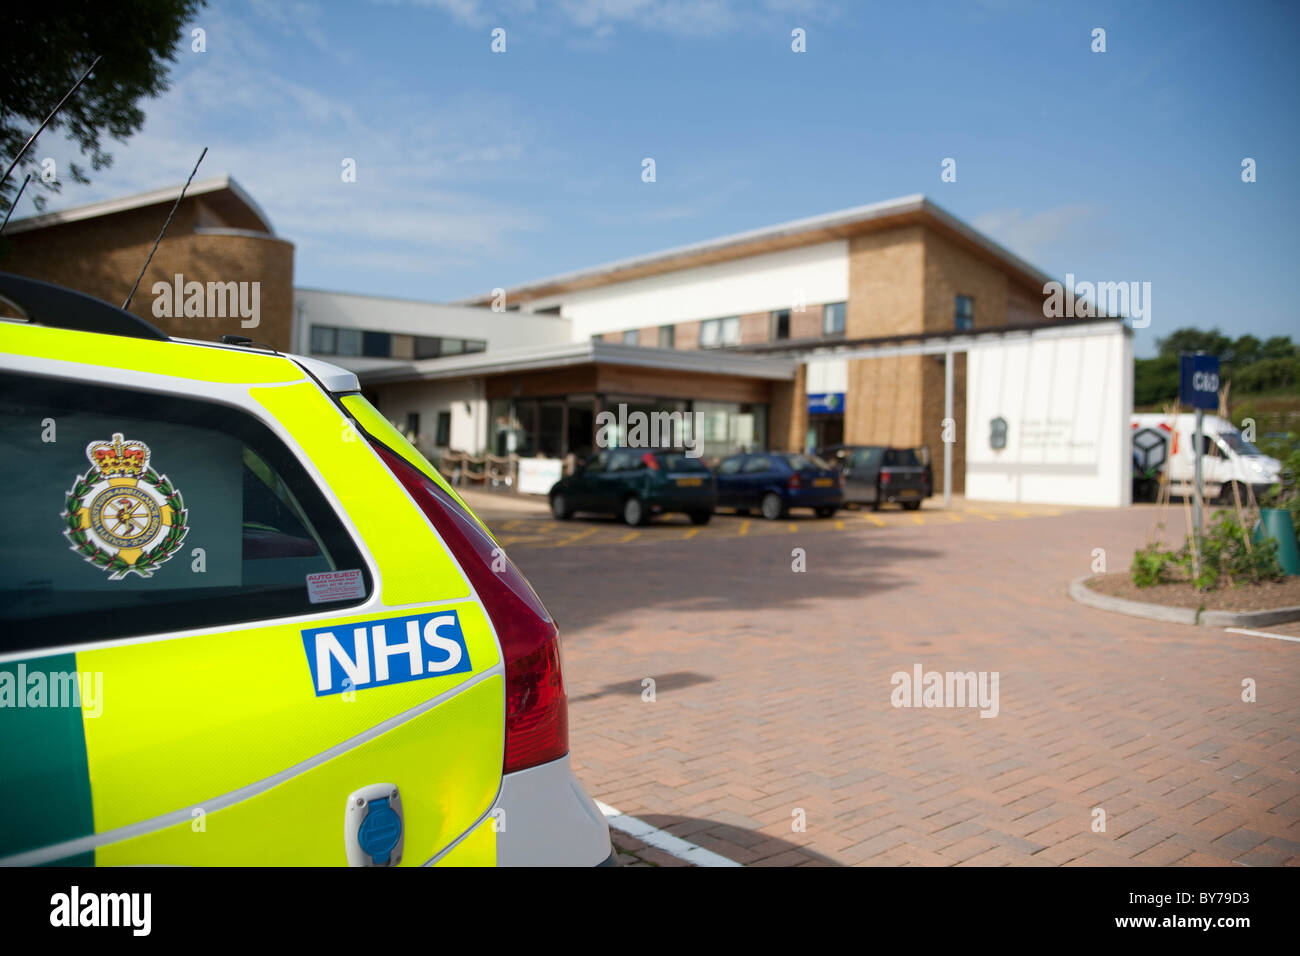 NHS ambulance at cullompton integrated health centre Stock Photo